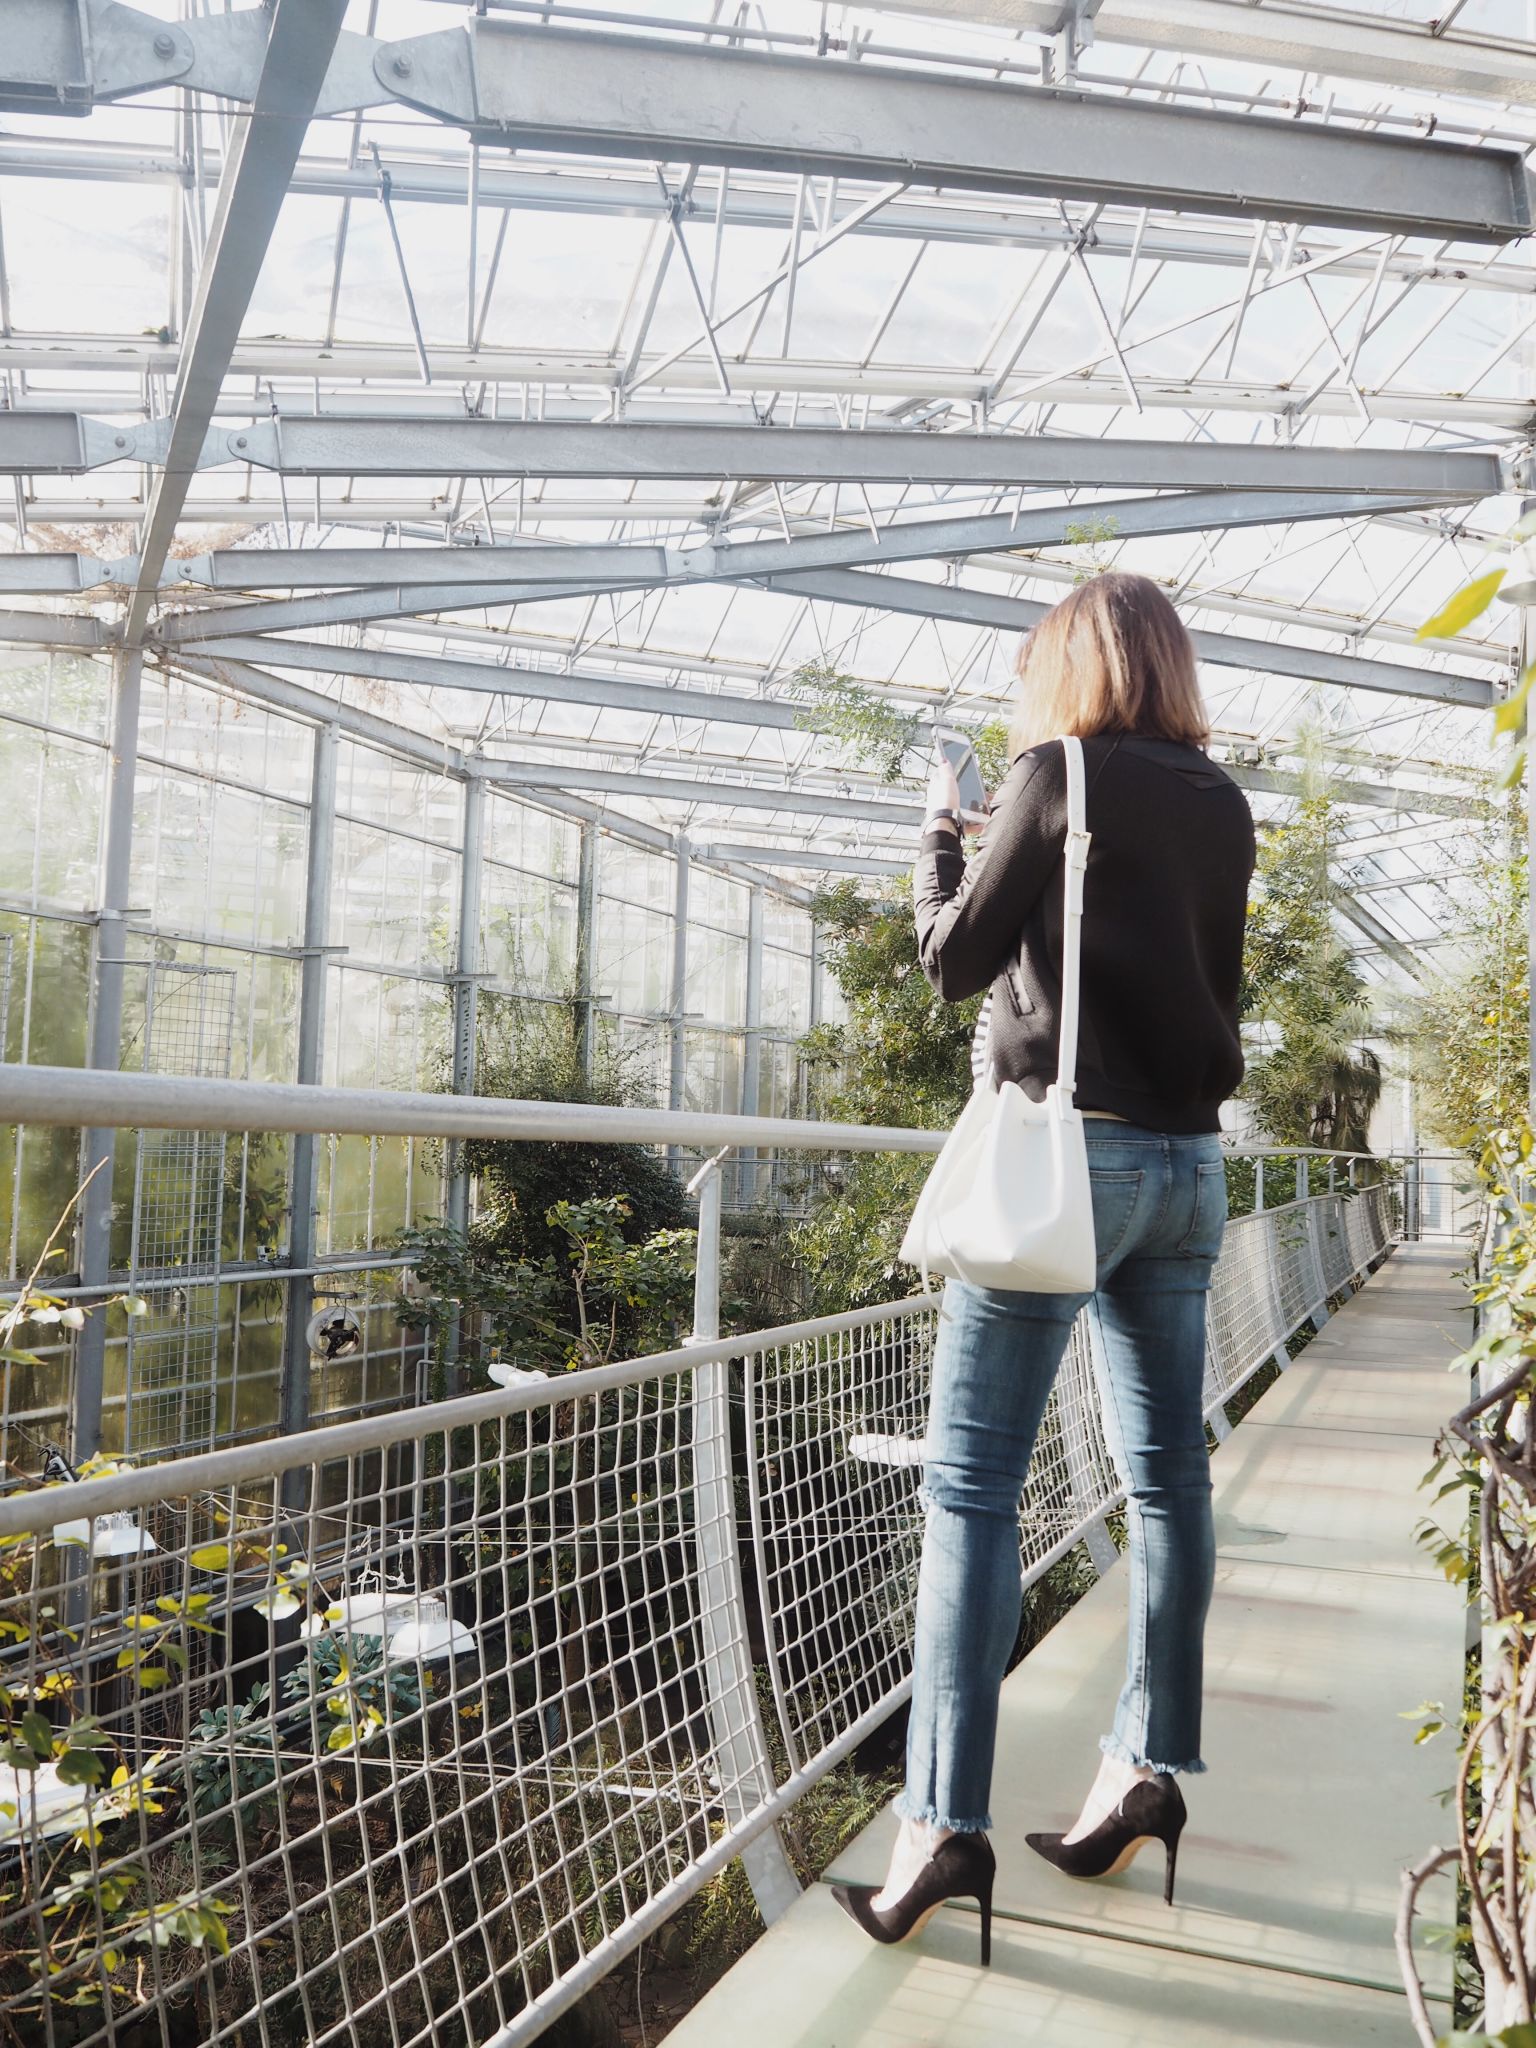 hortus-botanicus-amsterdam-botanic-garden-phone-case-otterbox-symmetry-clear-high-heels-white-bag-denim-bomber-jacket